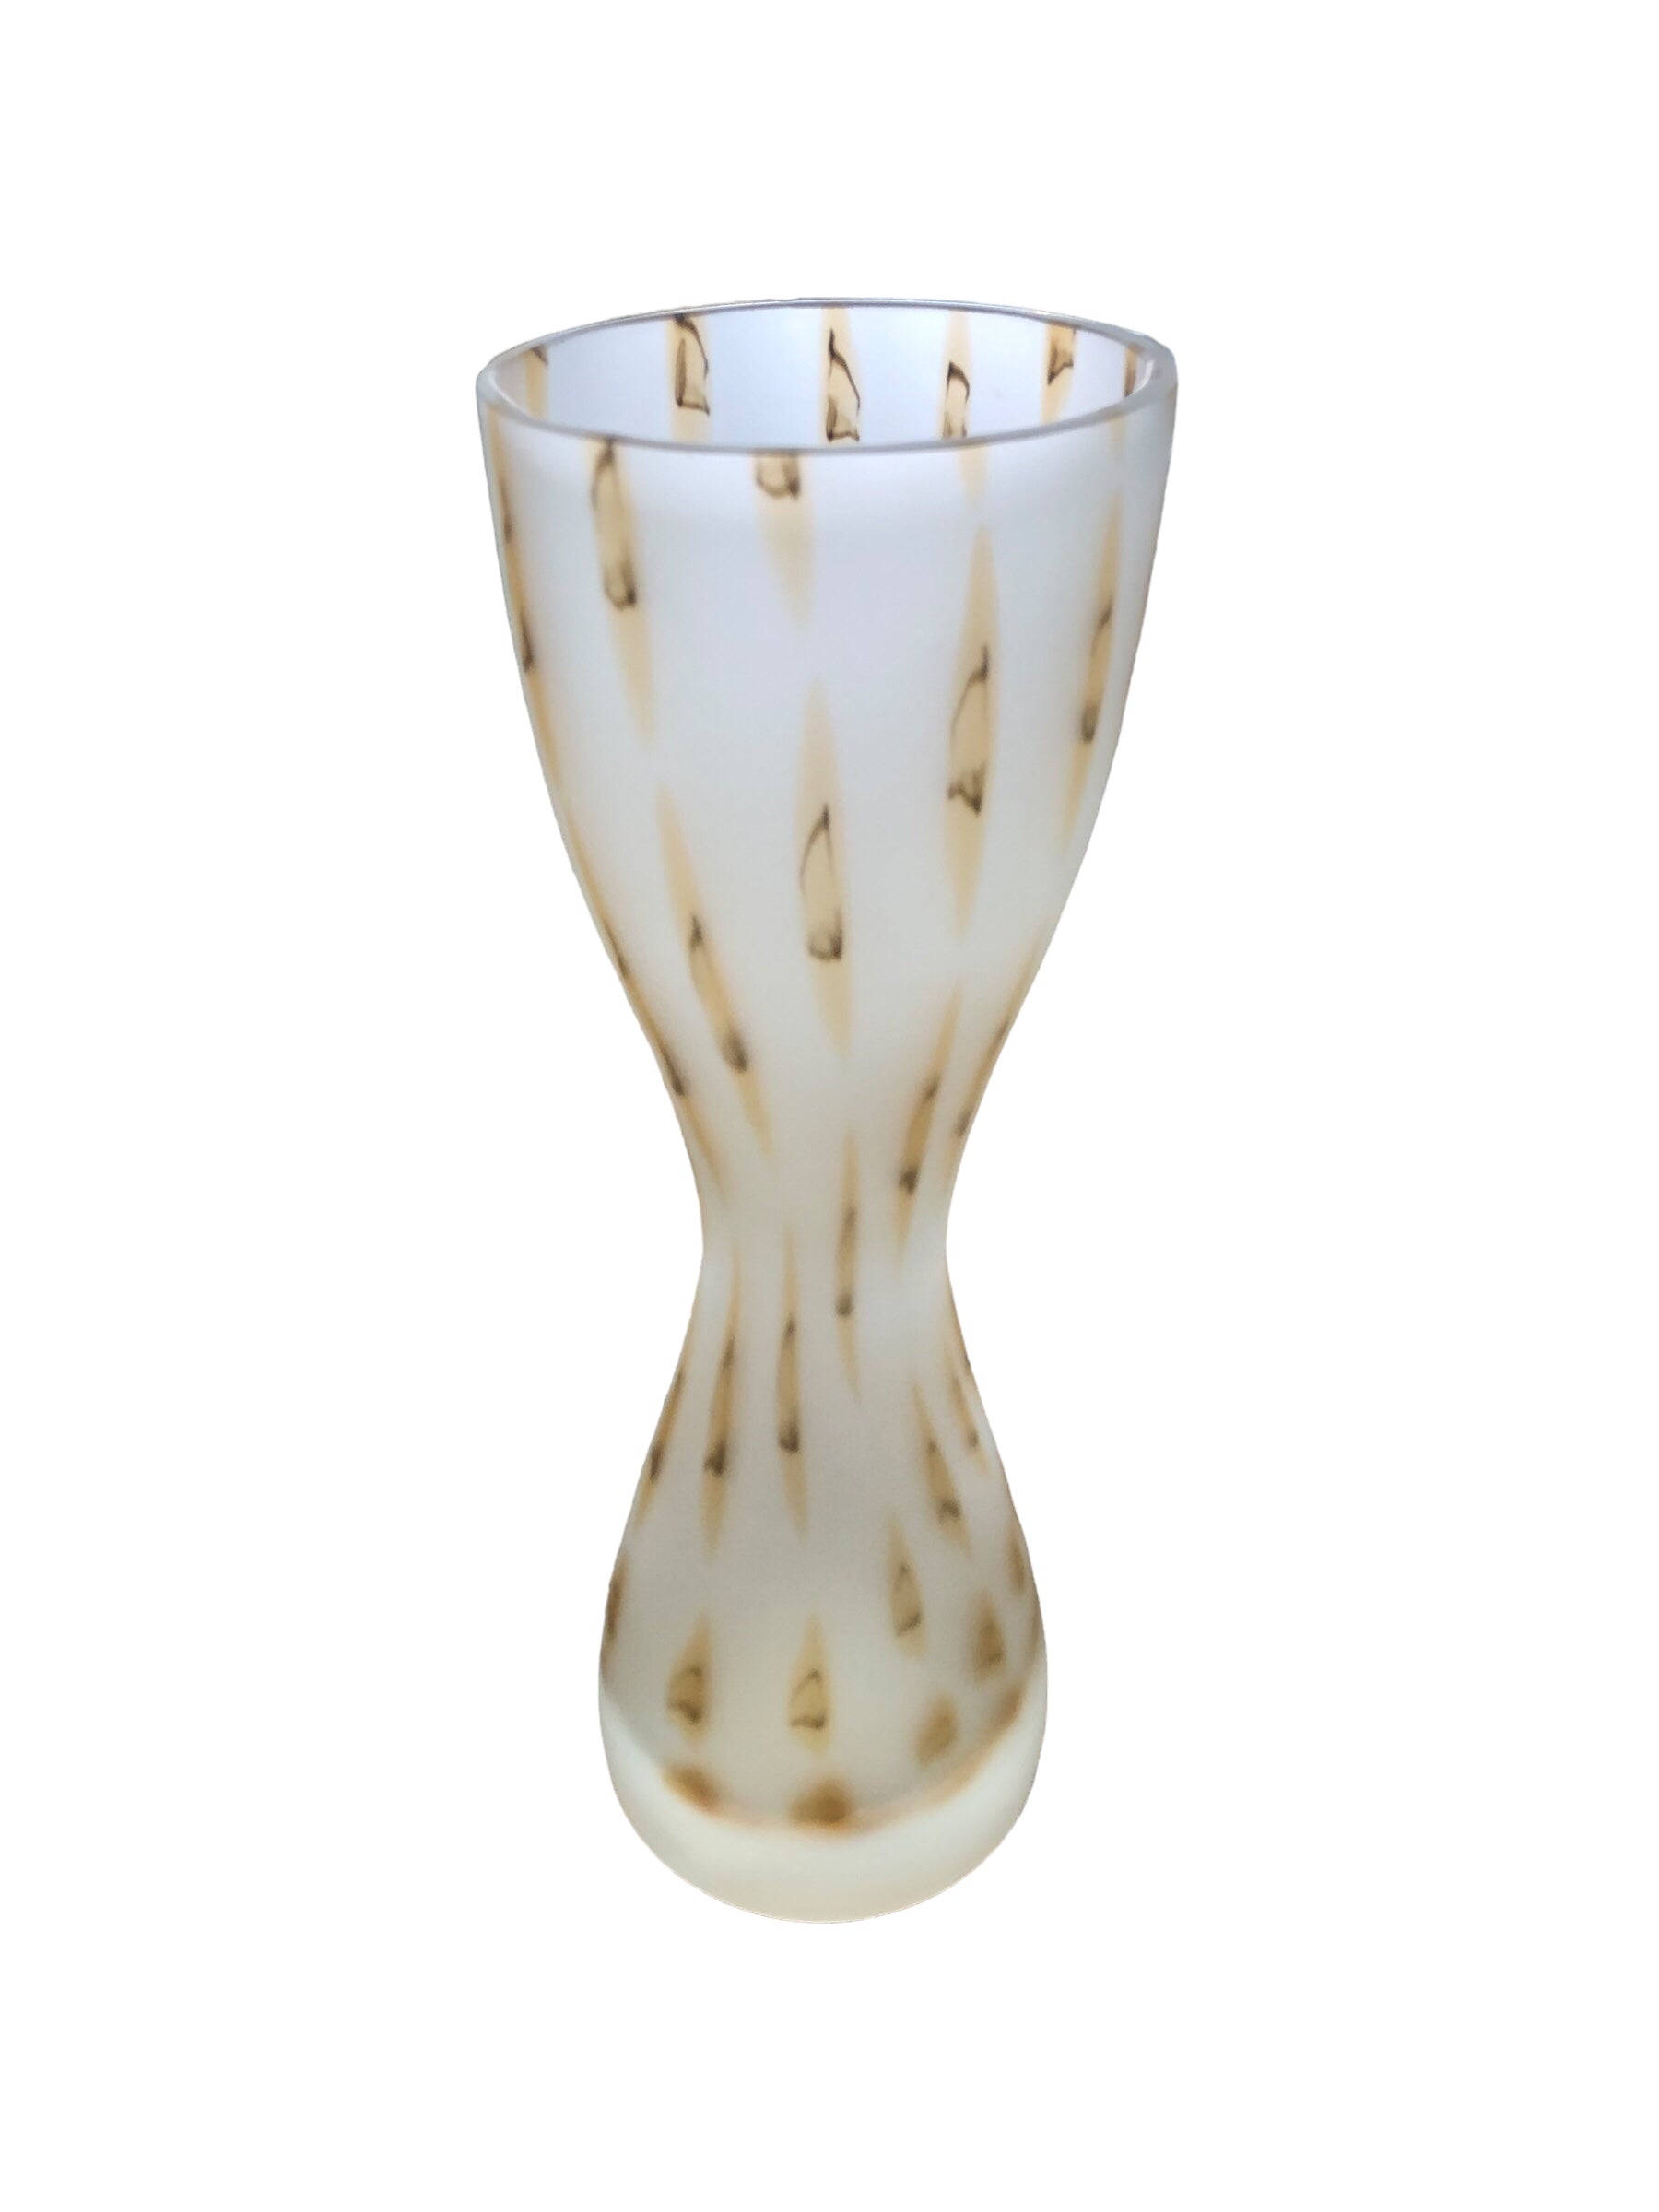 Fogged glass vase